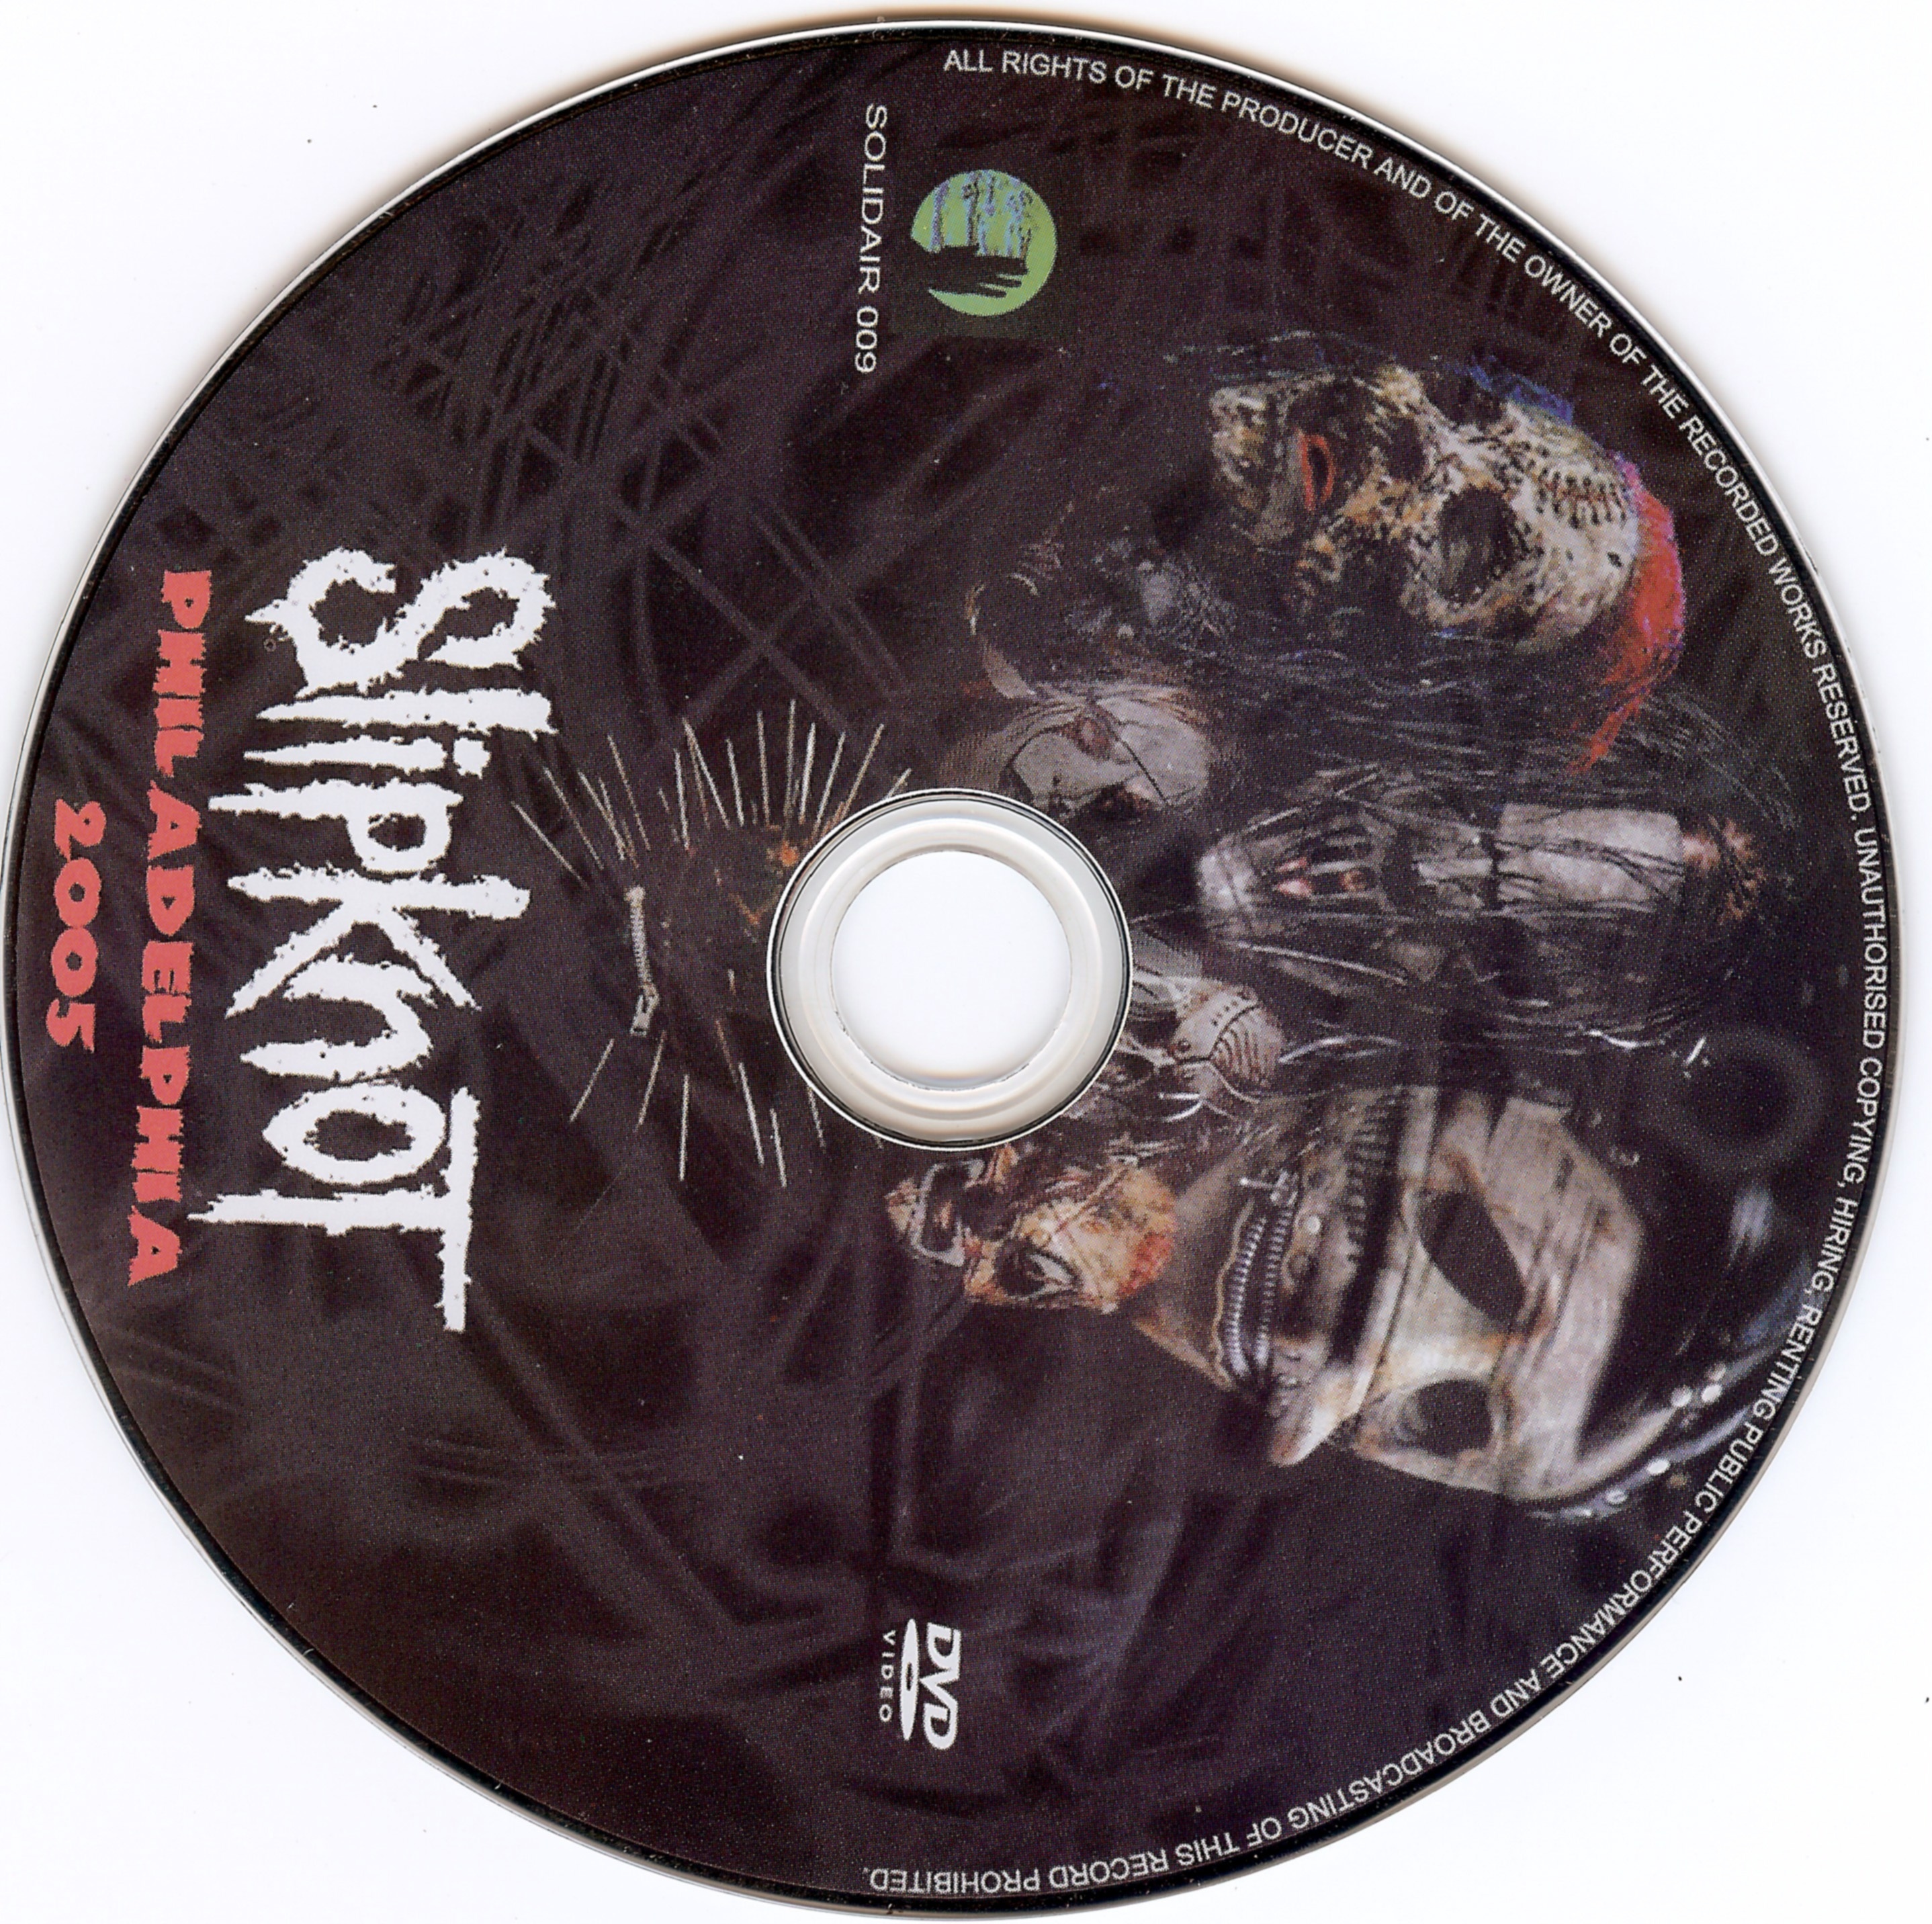 Slipknot - Surf acing 2005